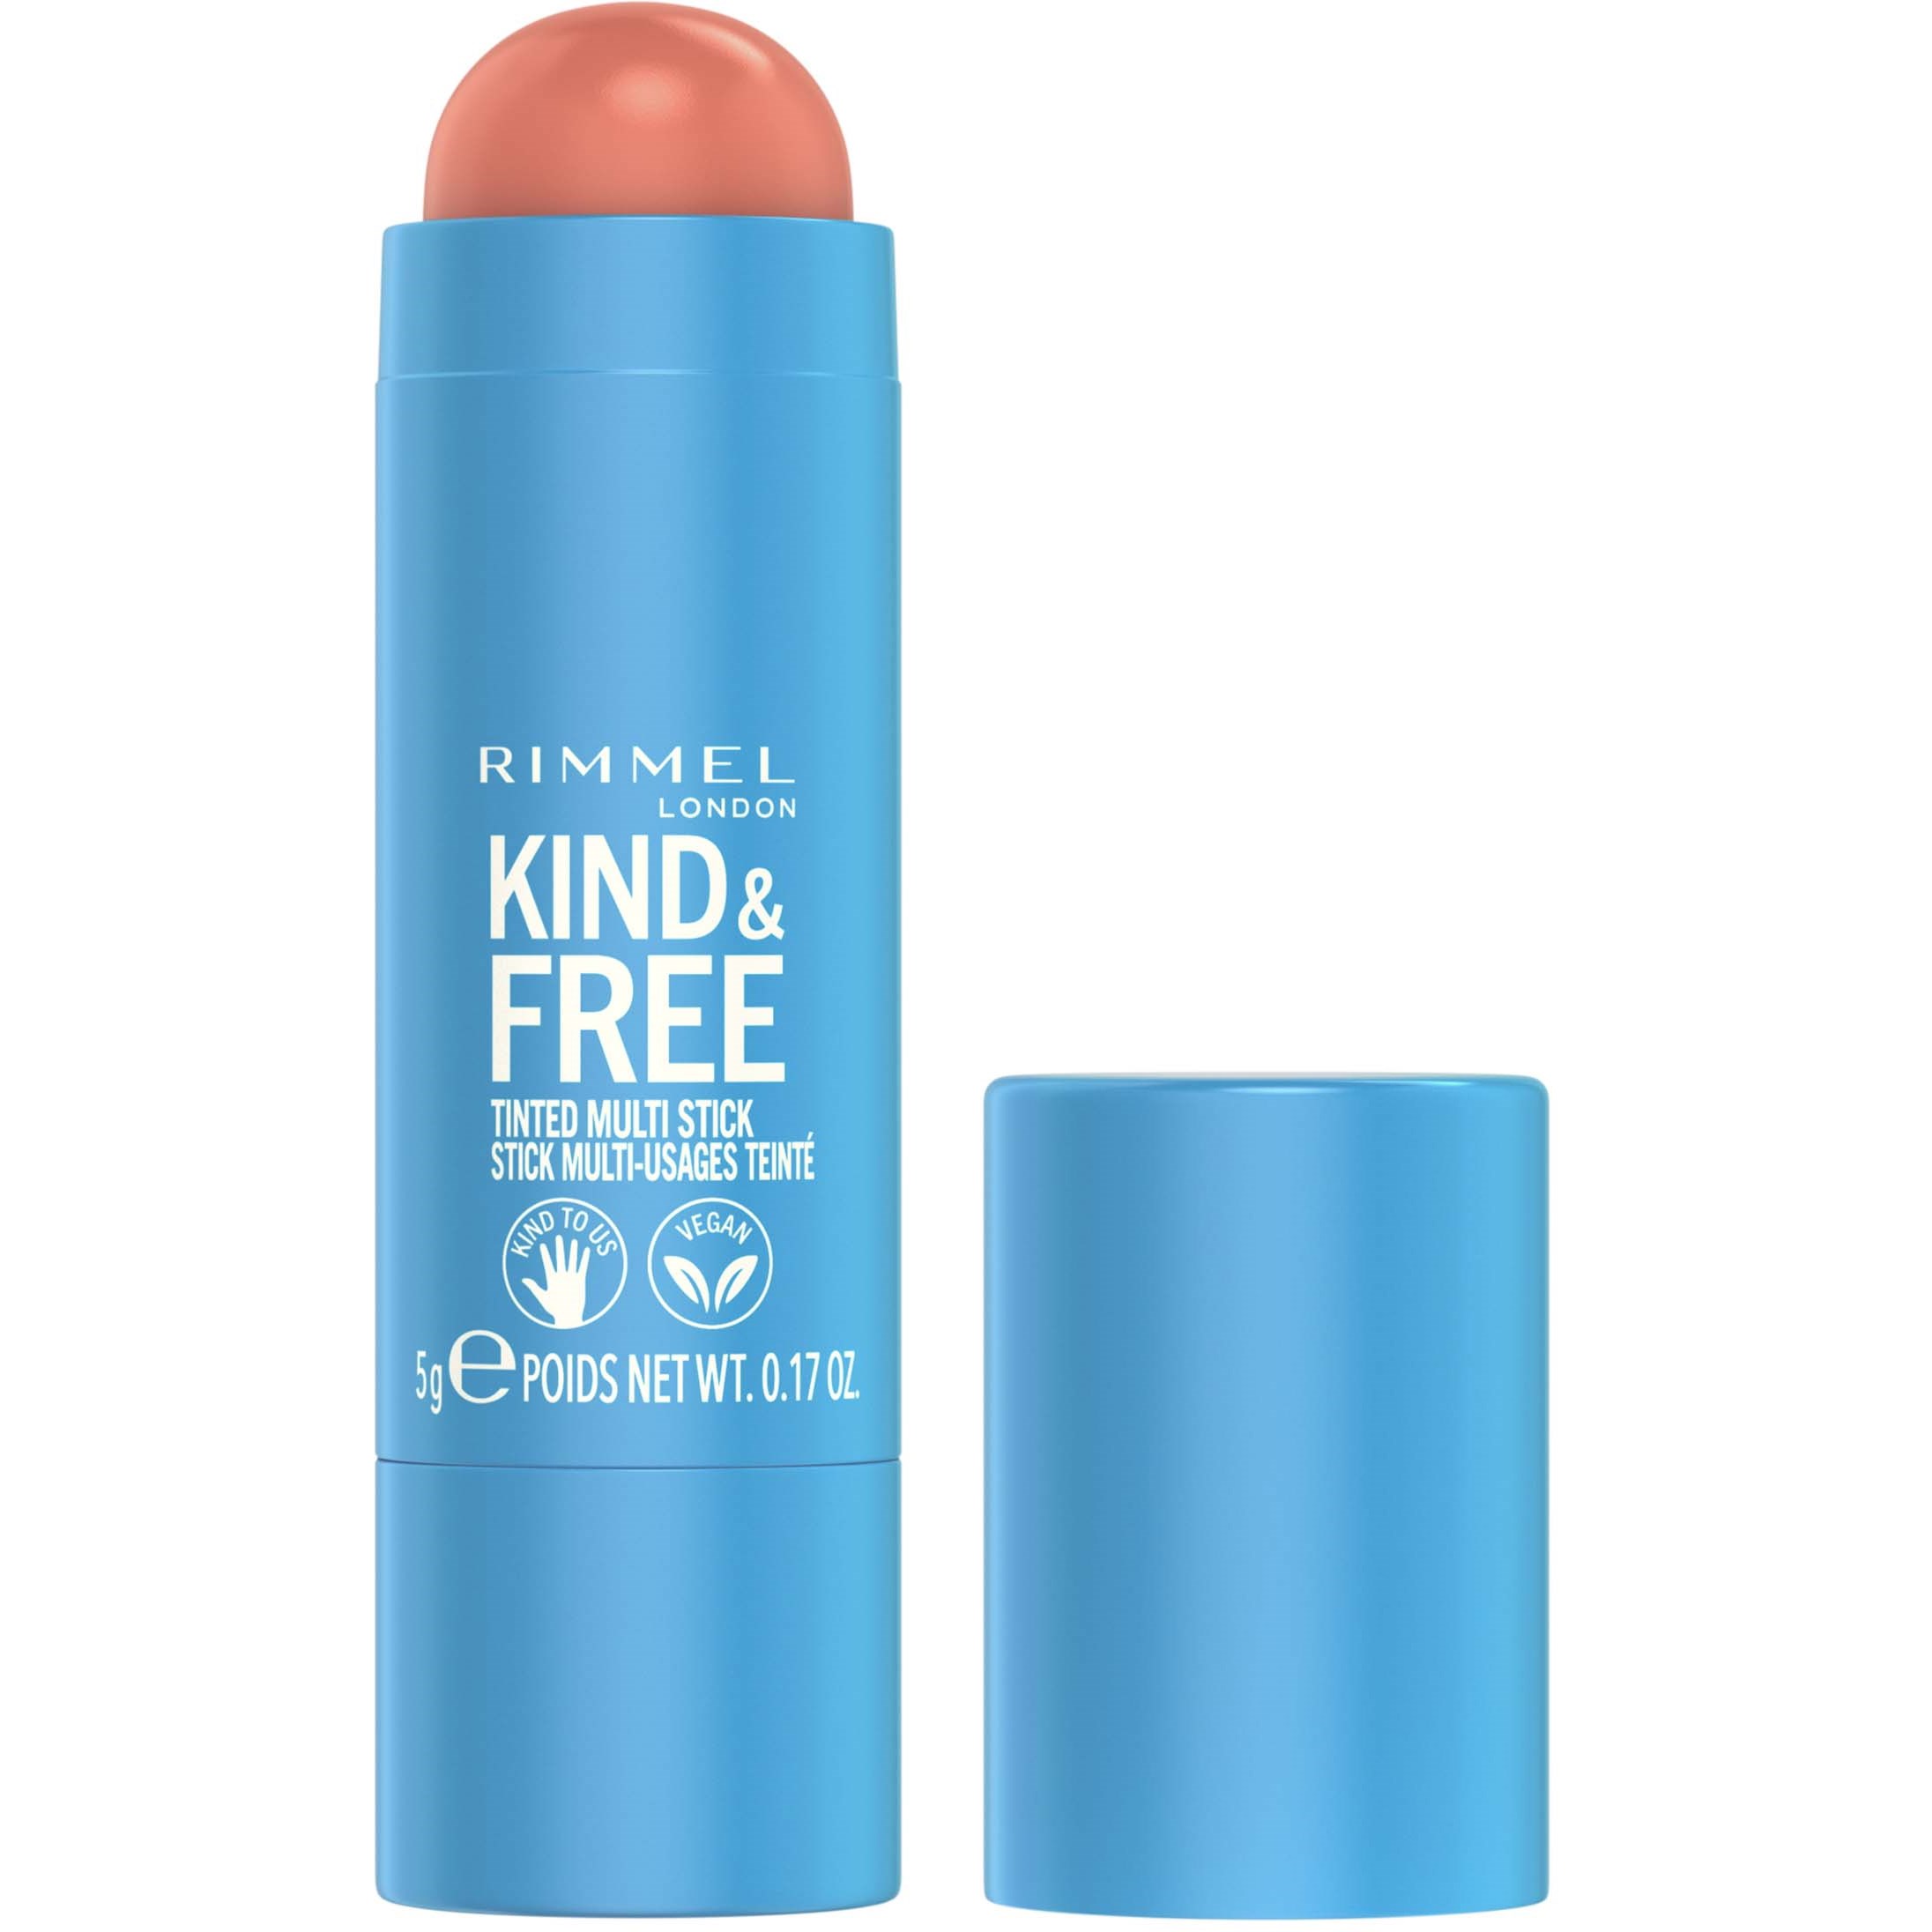 Rimmel Kind & Free Tinted Multi Stick 002 Peachy Cheeks